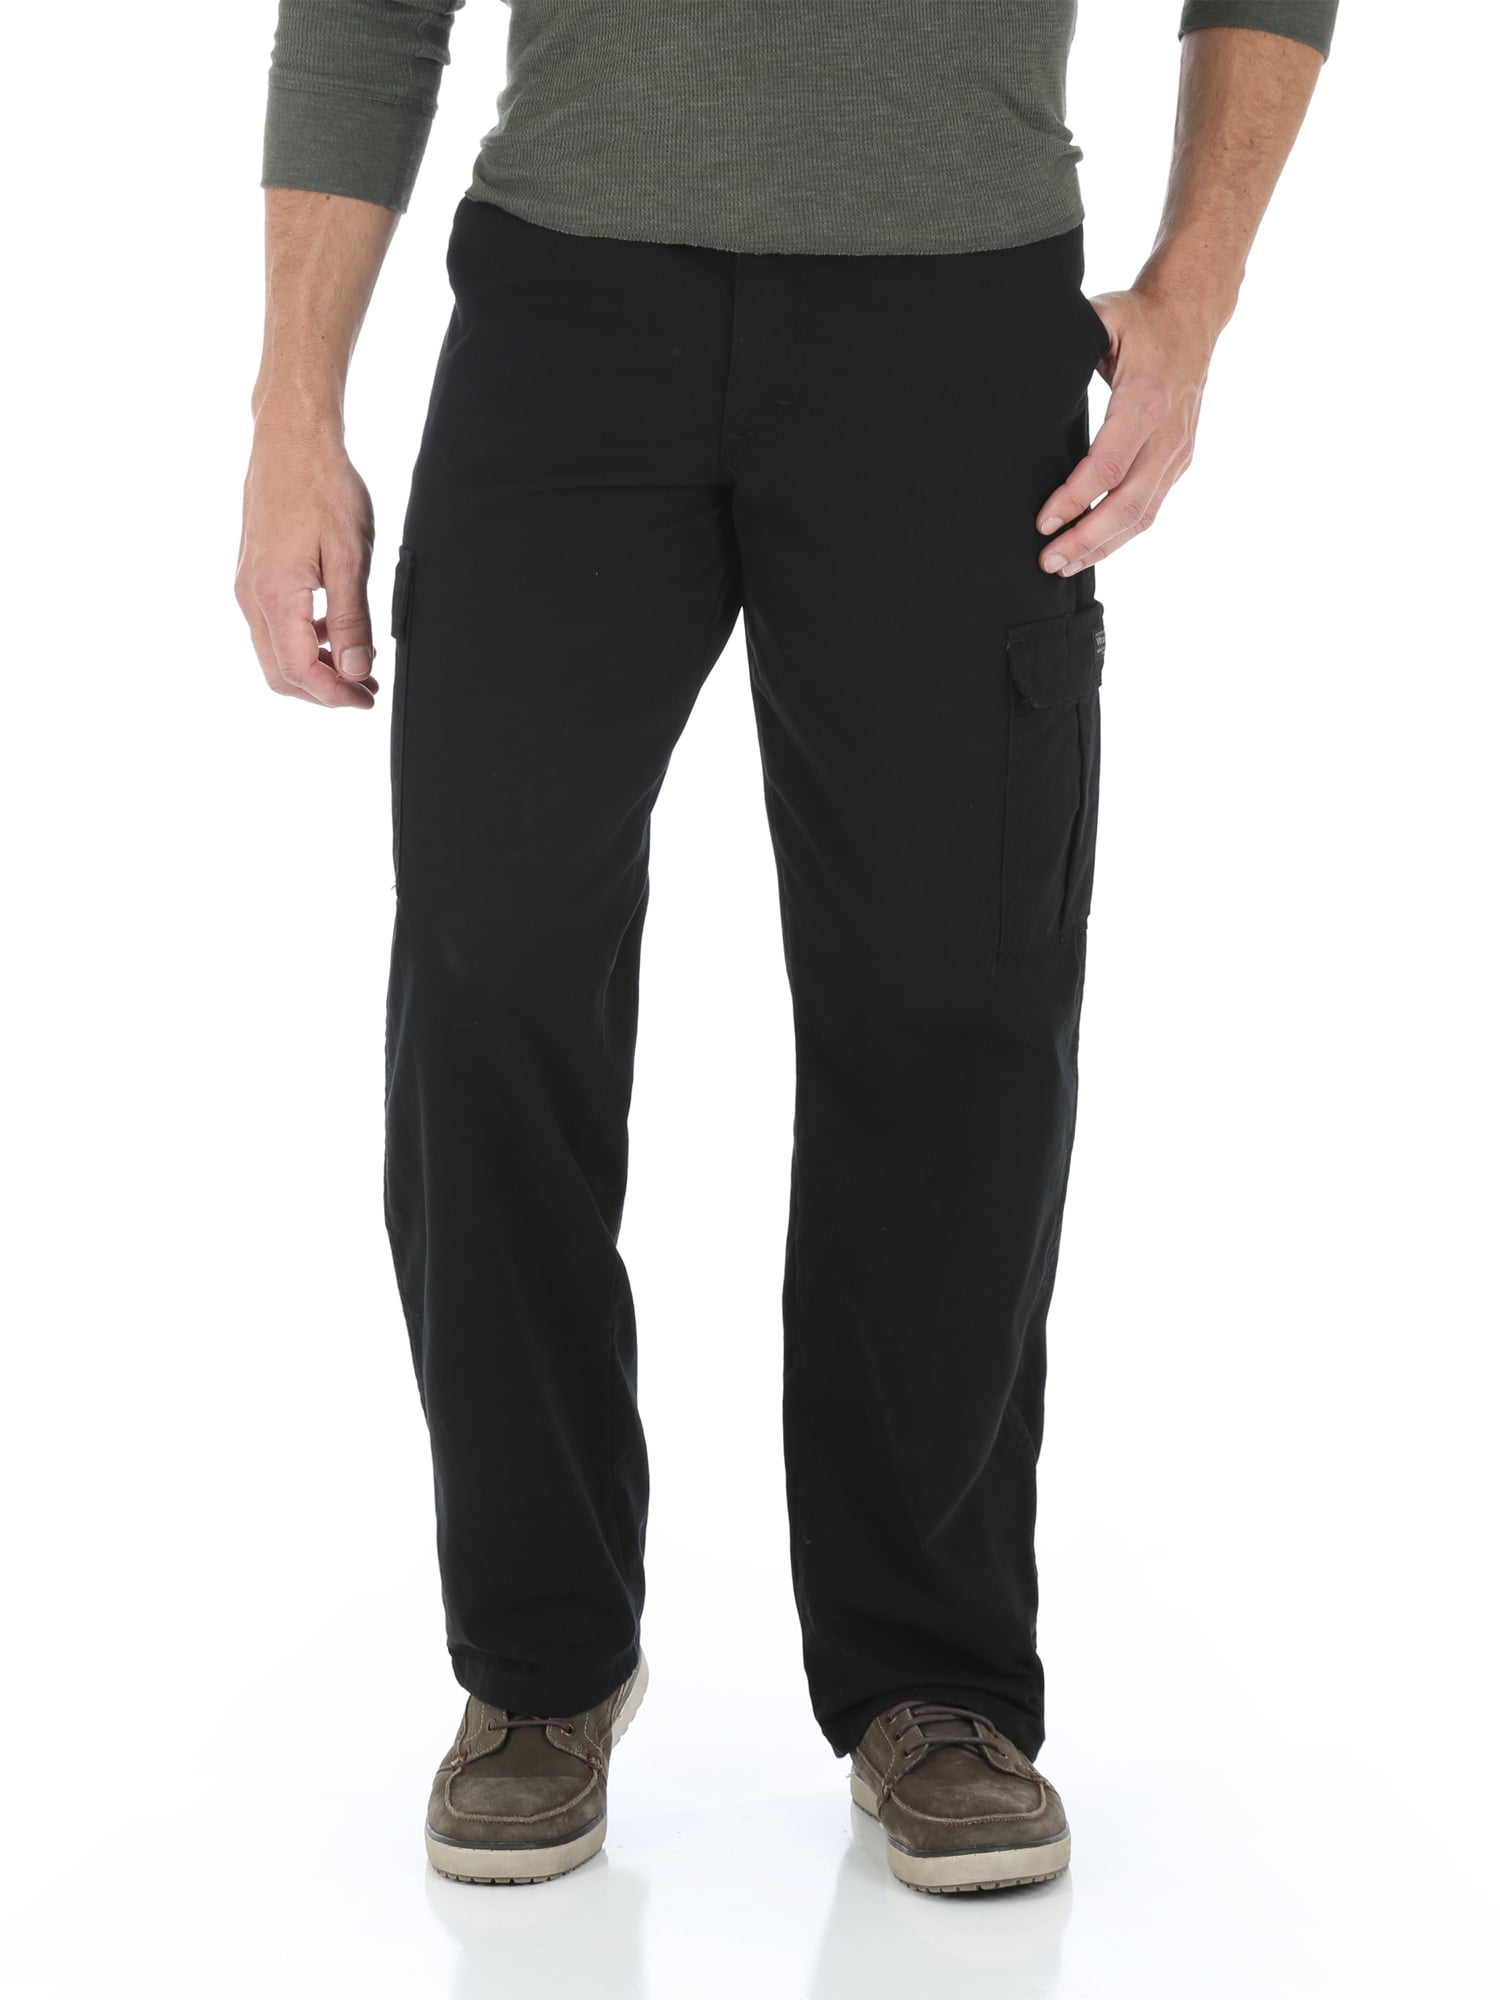 Wrangler Co Men's Relaxed Fit Fleece Lined Cargo Pants (Khaki, 30x32),30W x  32L at Amazon Men's Clothing store